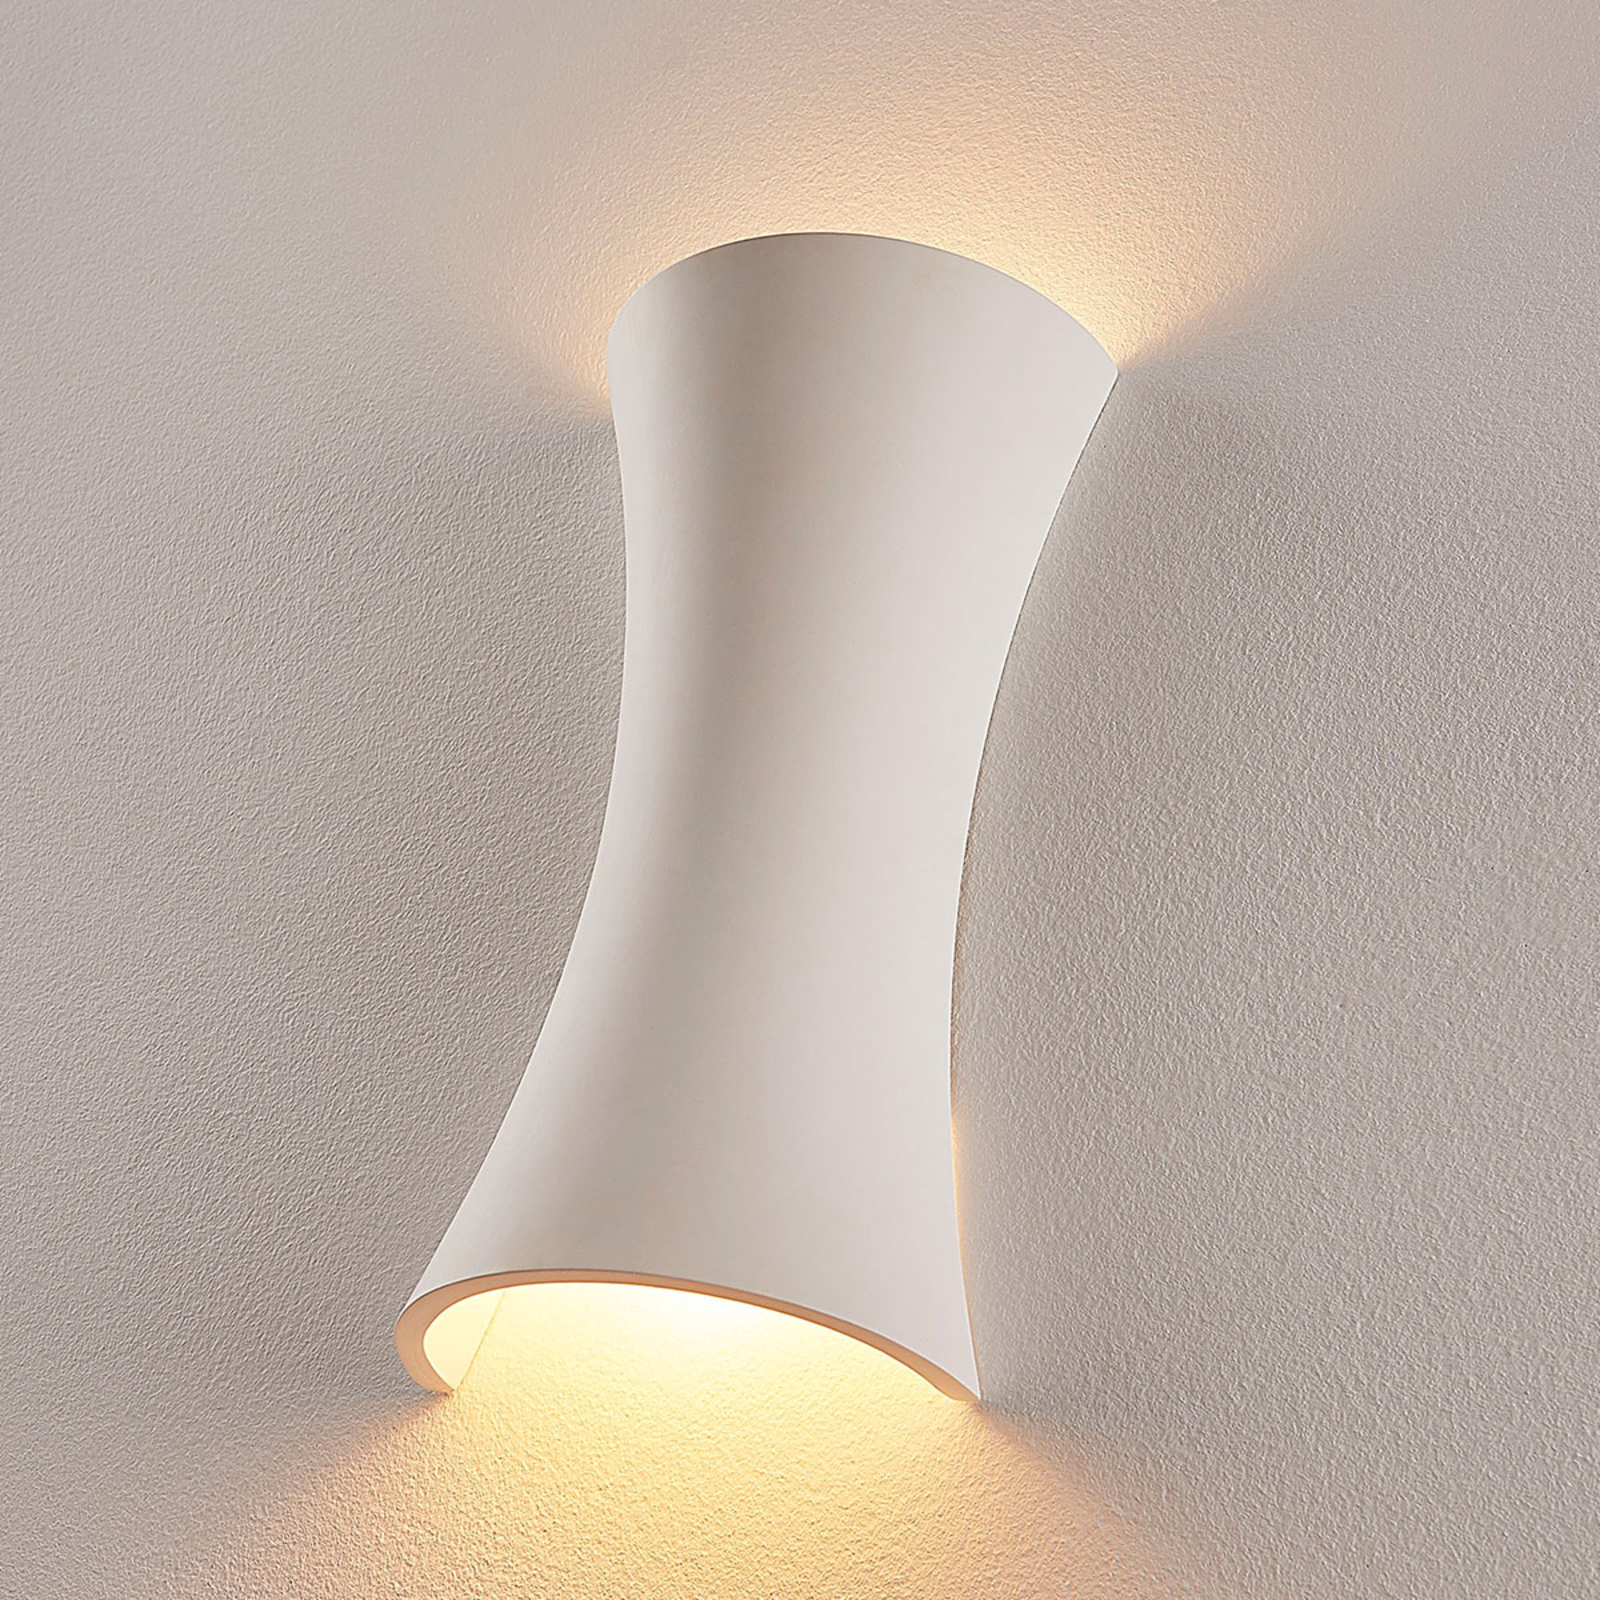 Edon gipsz fali lámpa, fehér, homorú, 30 cm